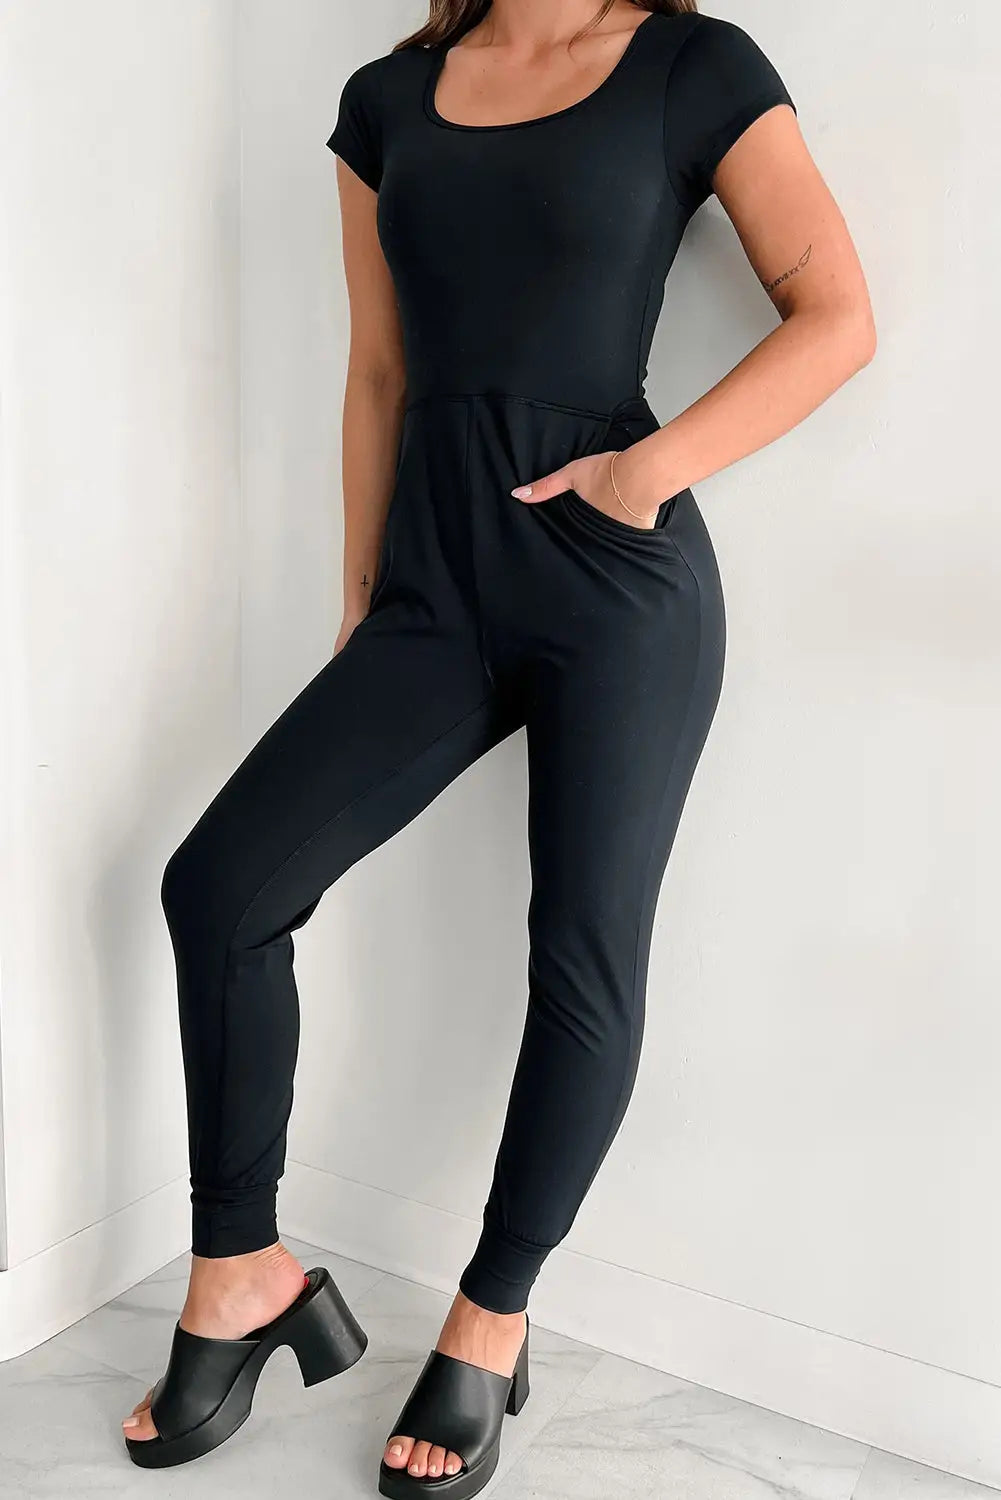 Black short sleeve pocket jogger bottom athleisure jumpsuit - s / 95% polyester + 5% elastane - jumpsuits & rompers